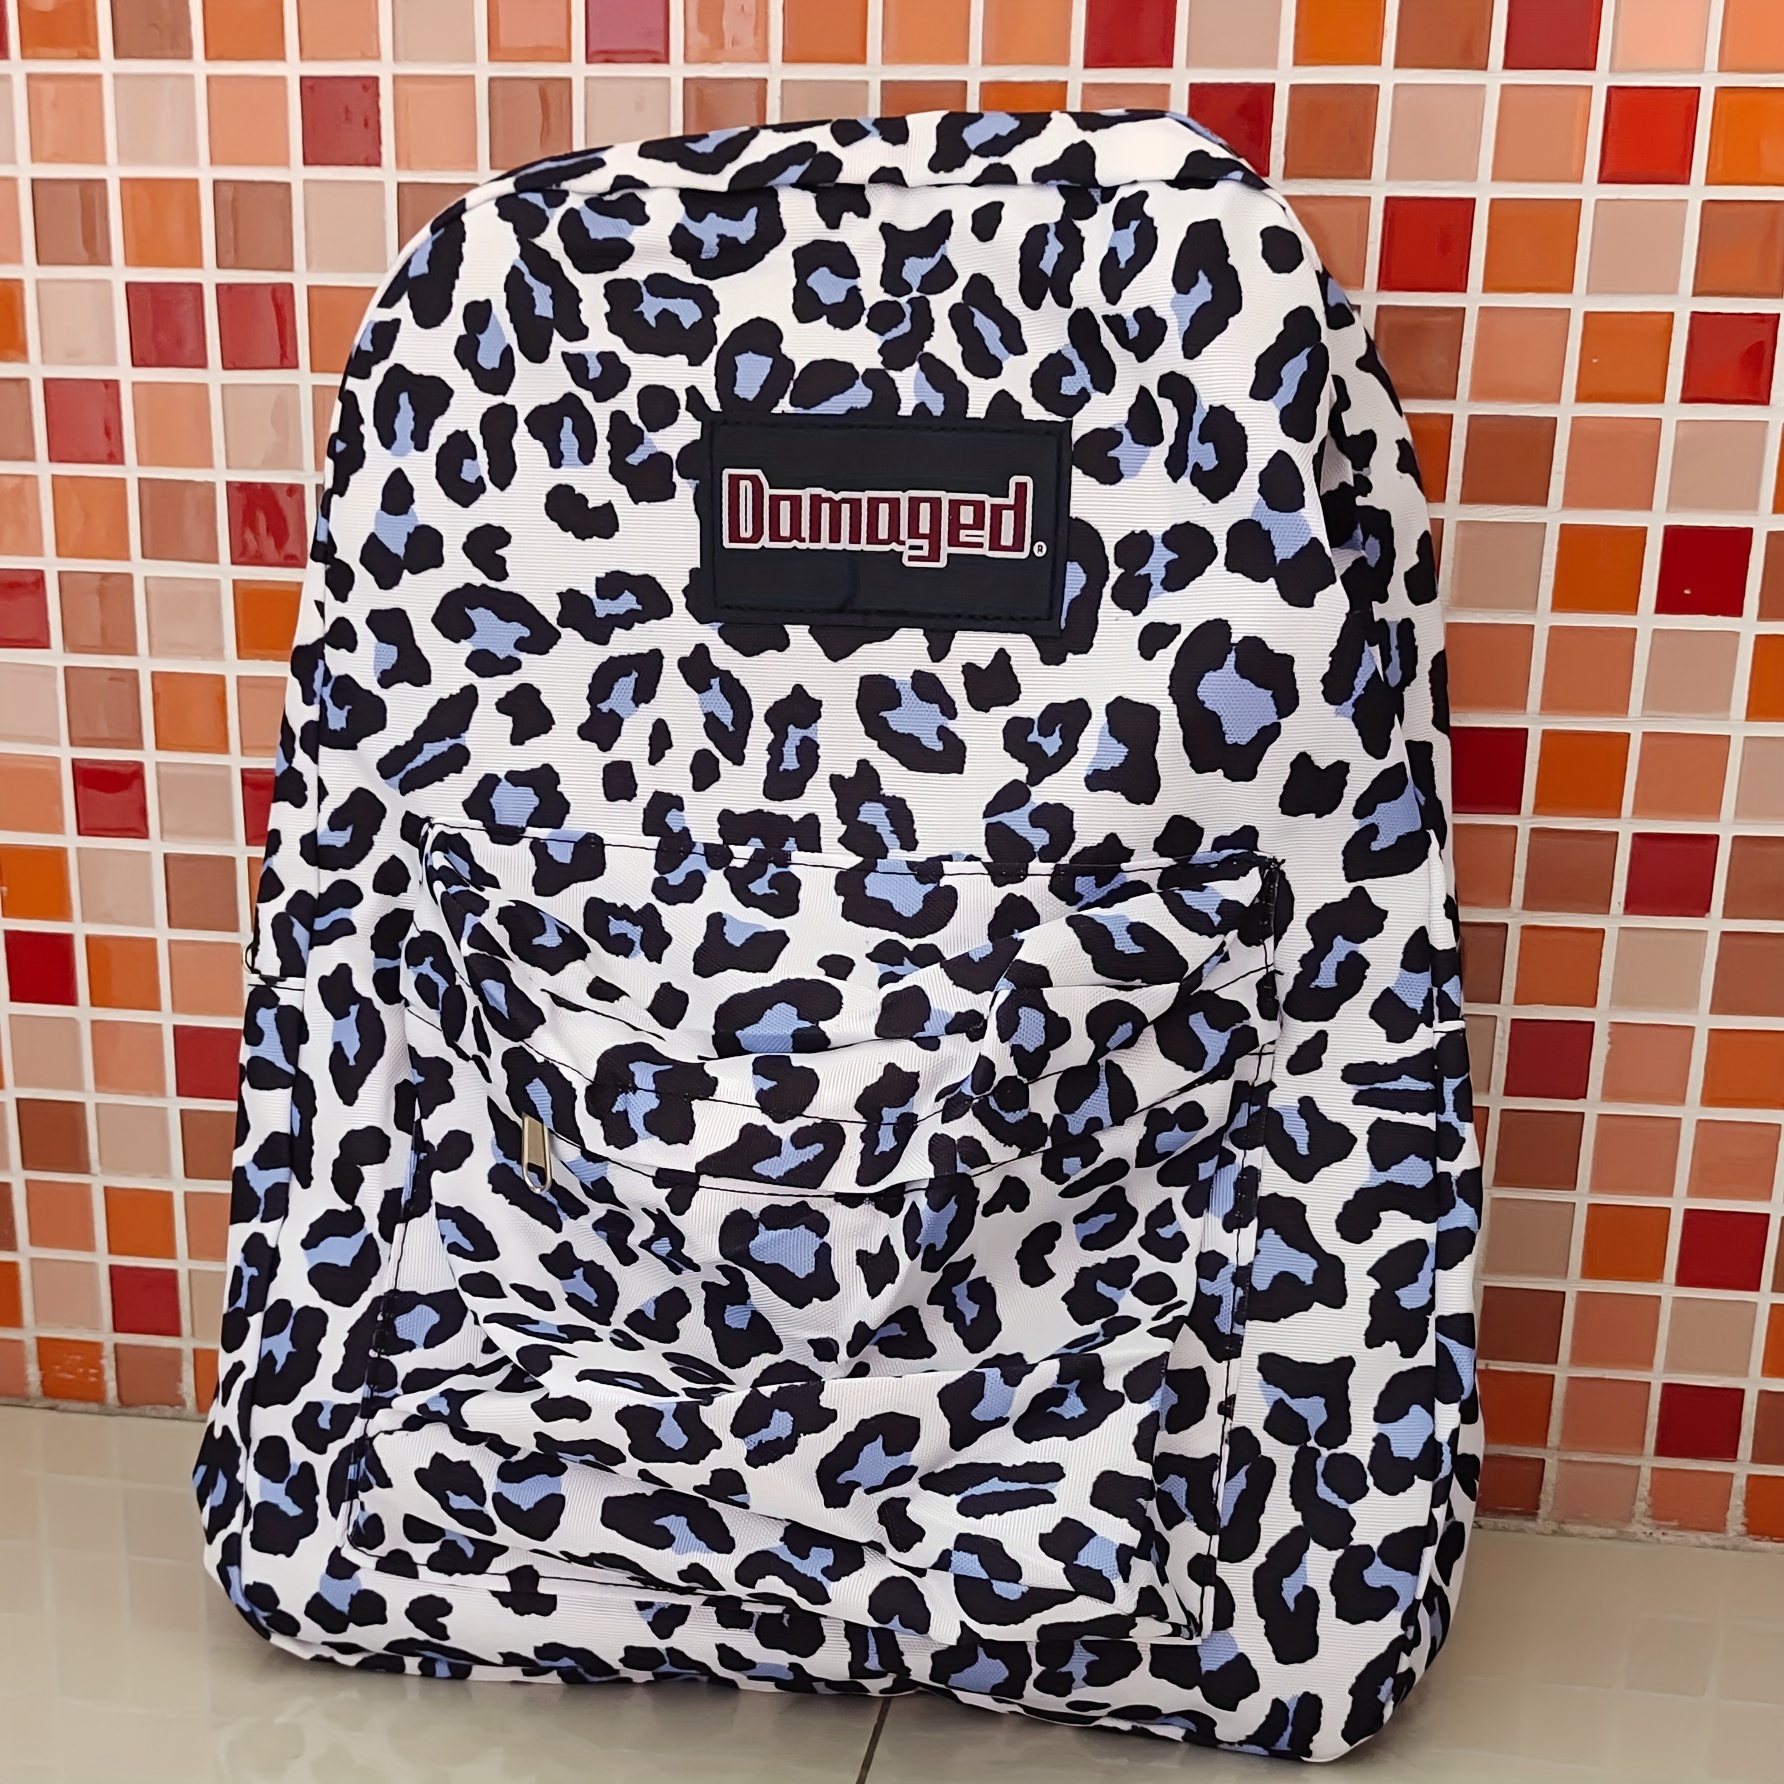 Jansport, Bags, Vintage Cheetah Print Backpack Jansport Fuzzy 9s Pink  Zippers